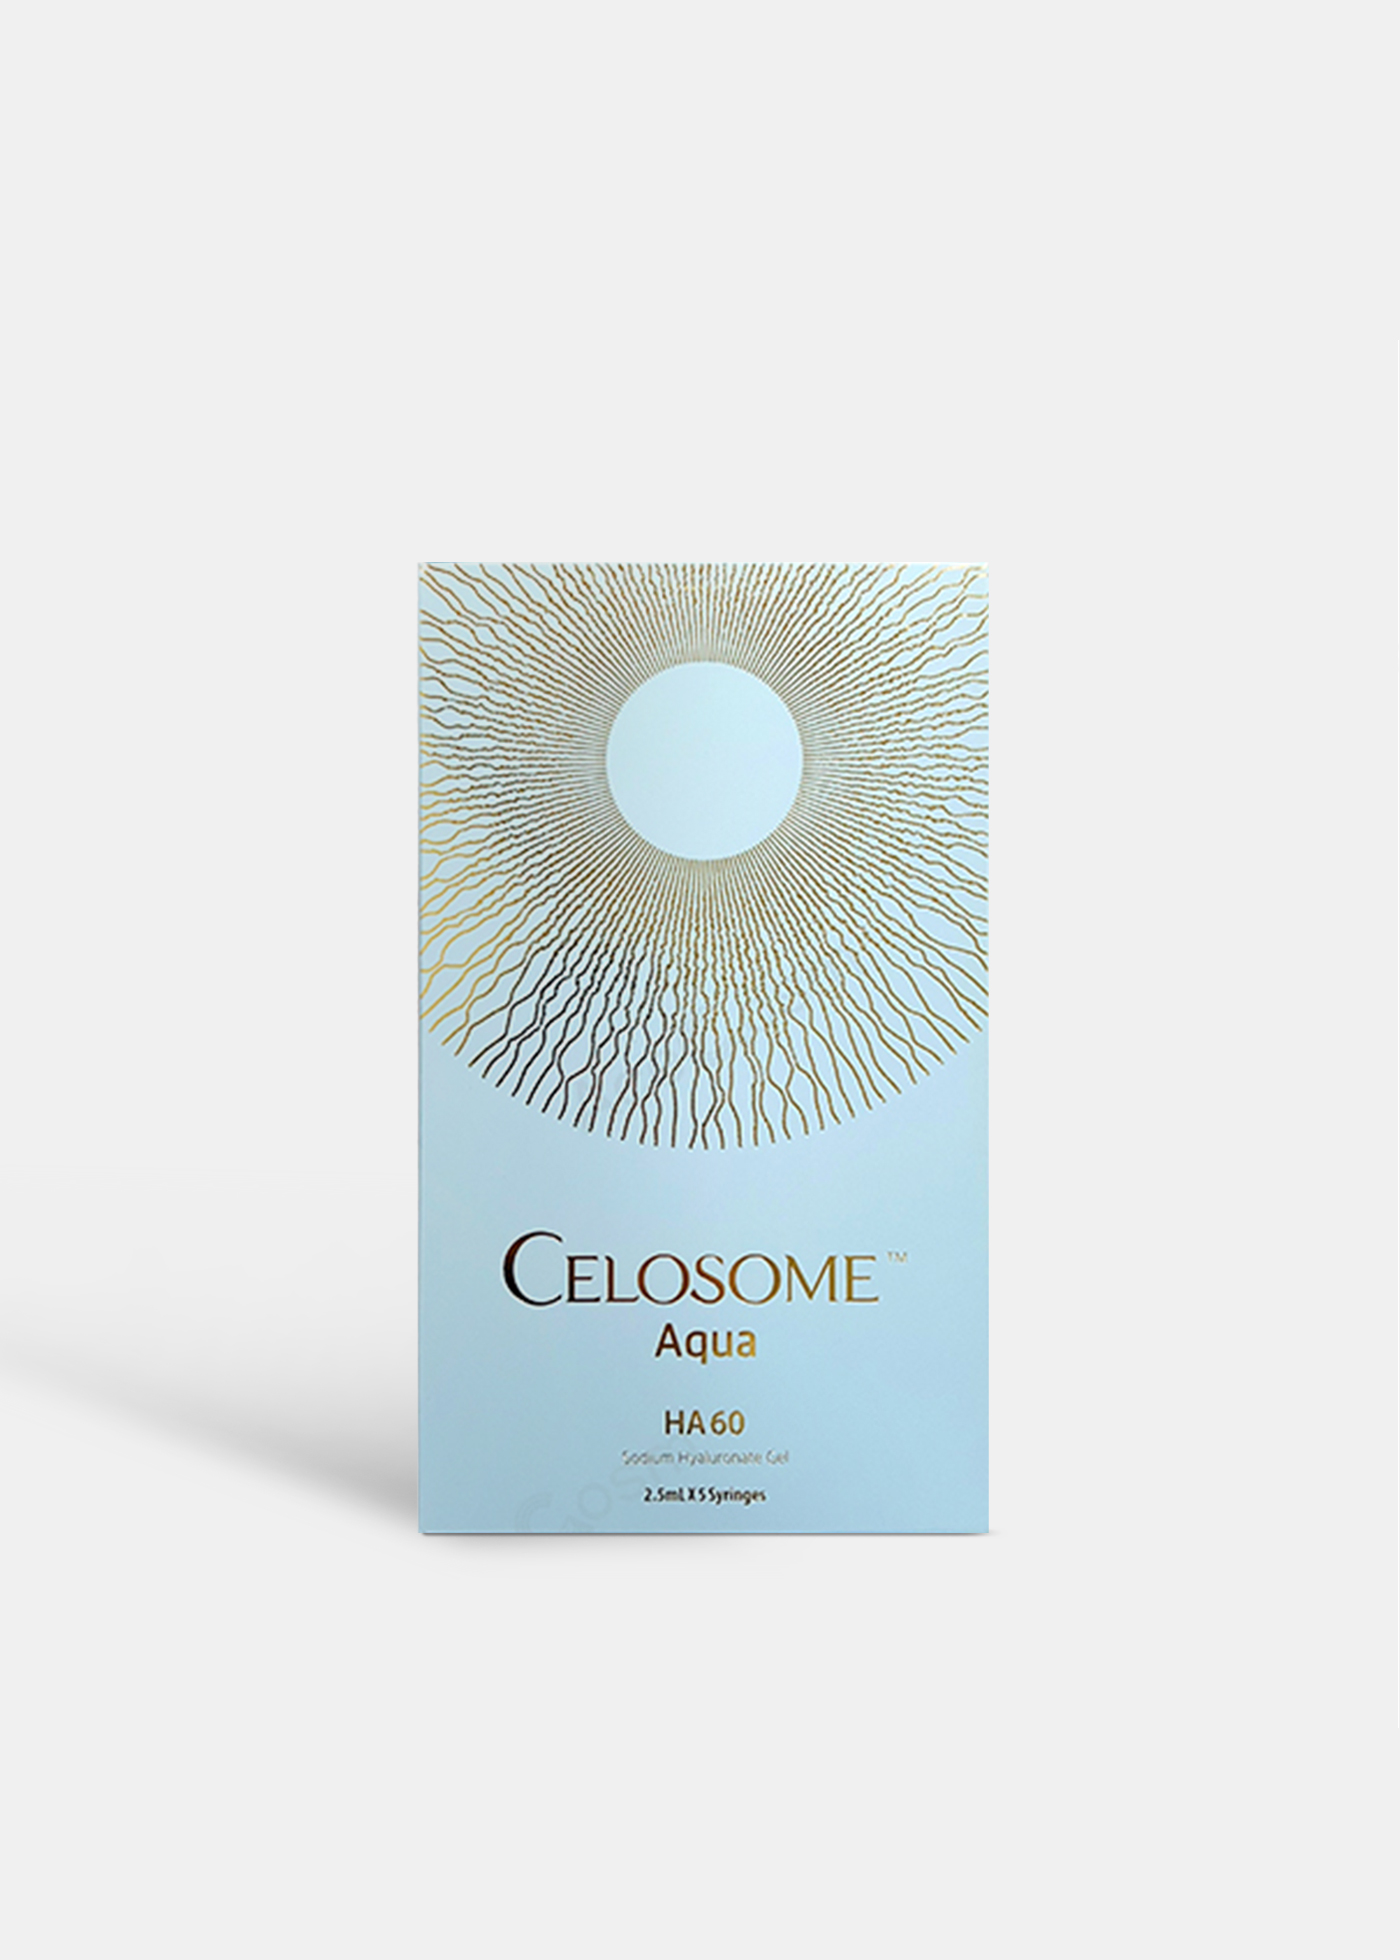 Celosome Aqua(Non Lido) image